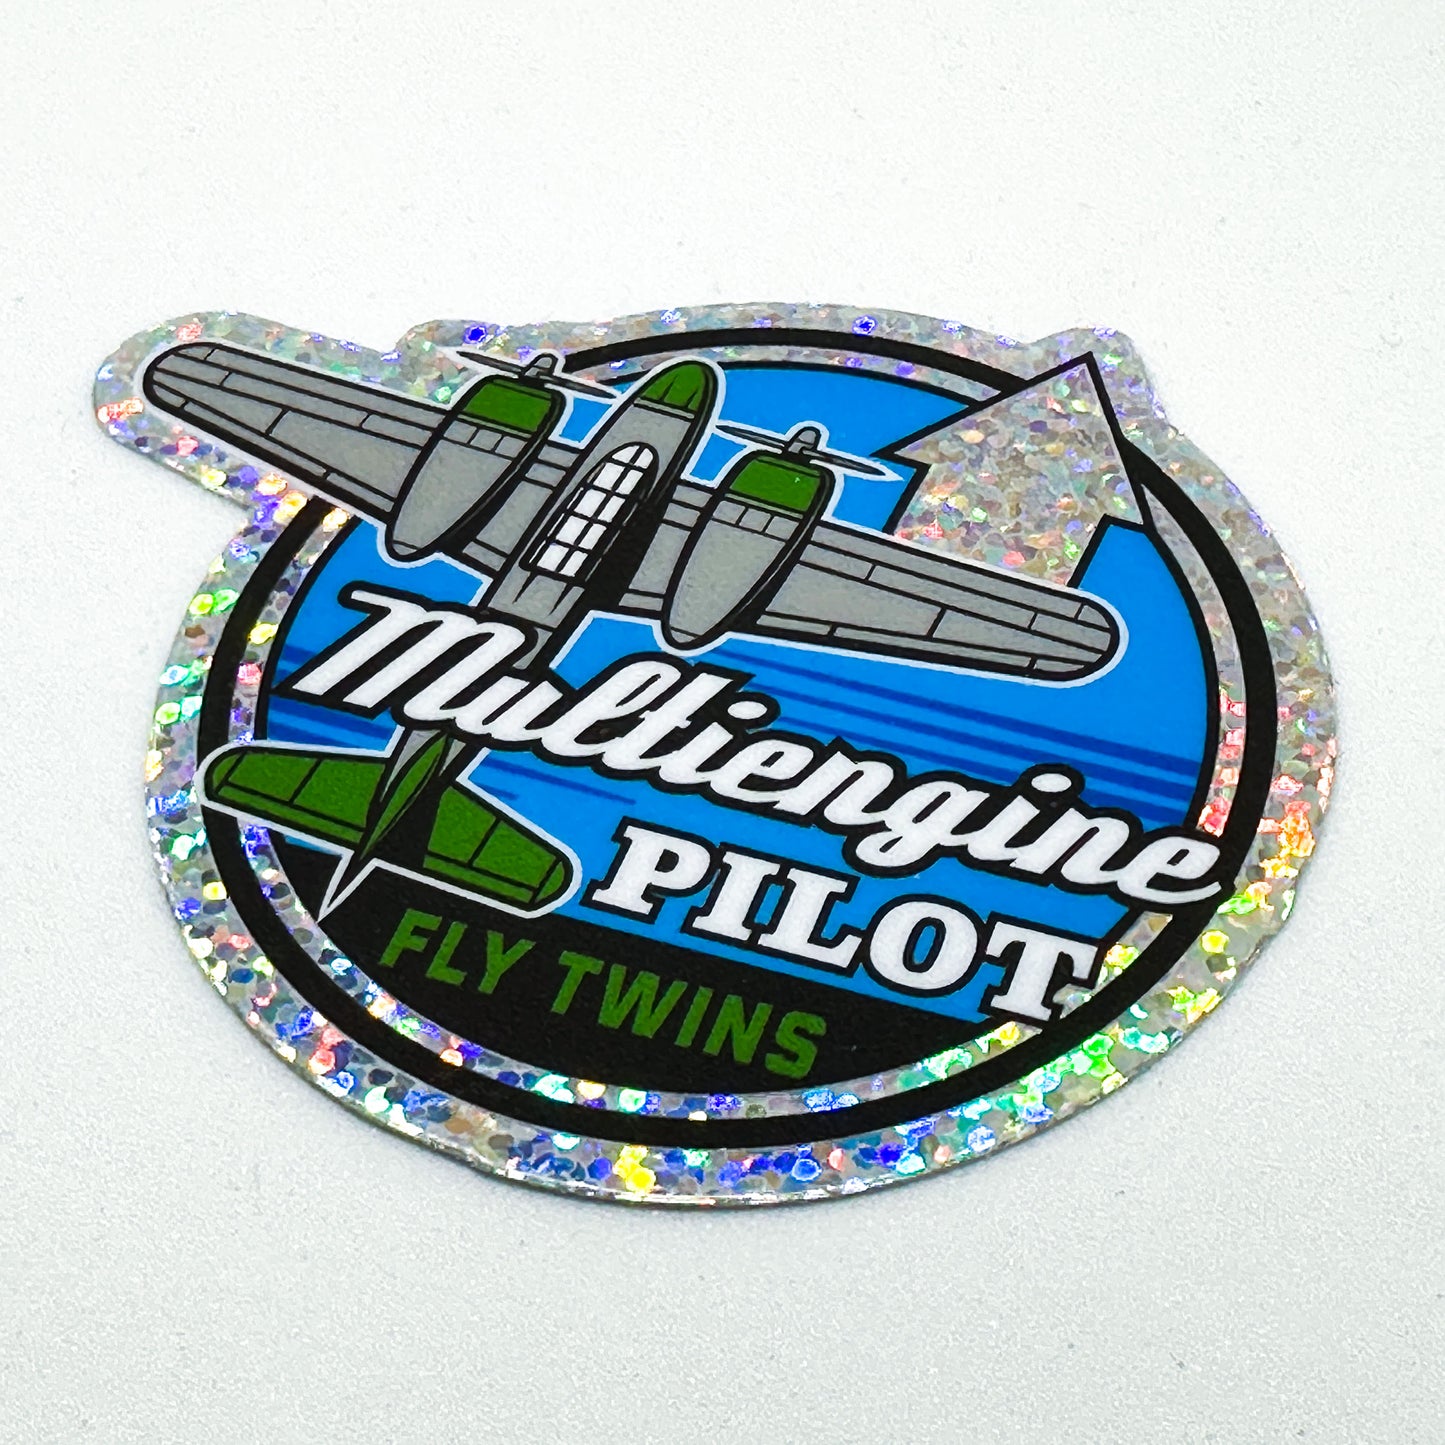 Multiengine Pilot Glitter Sticker